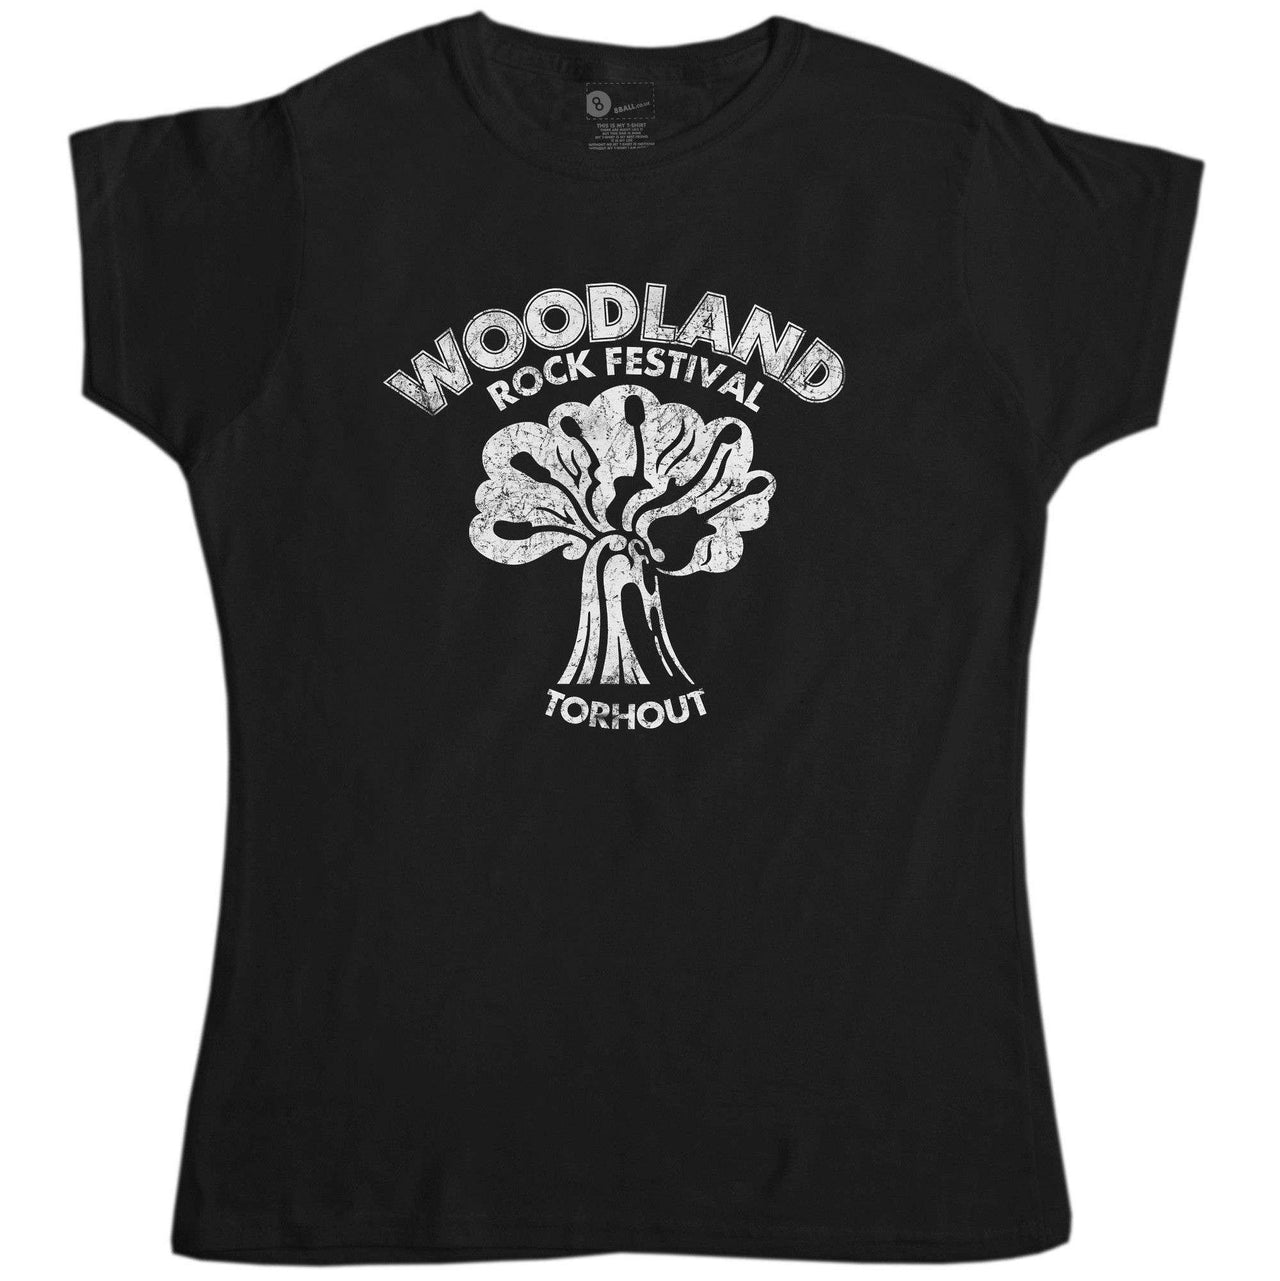 Woodland Rock Festival T-Shirt for Women As Worn By Joan Jett 8Ball